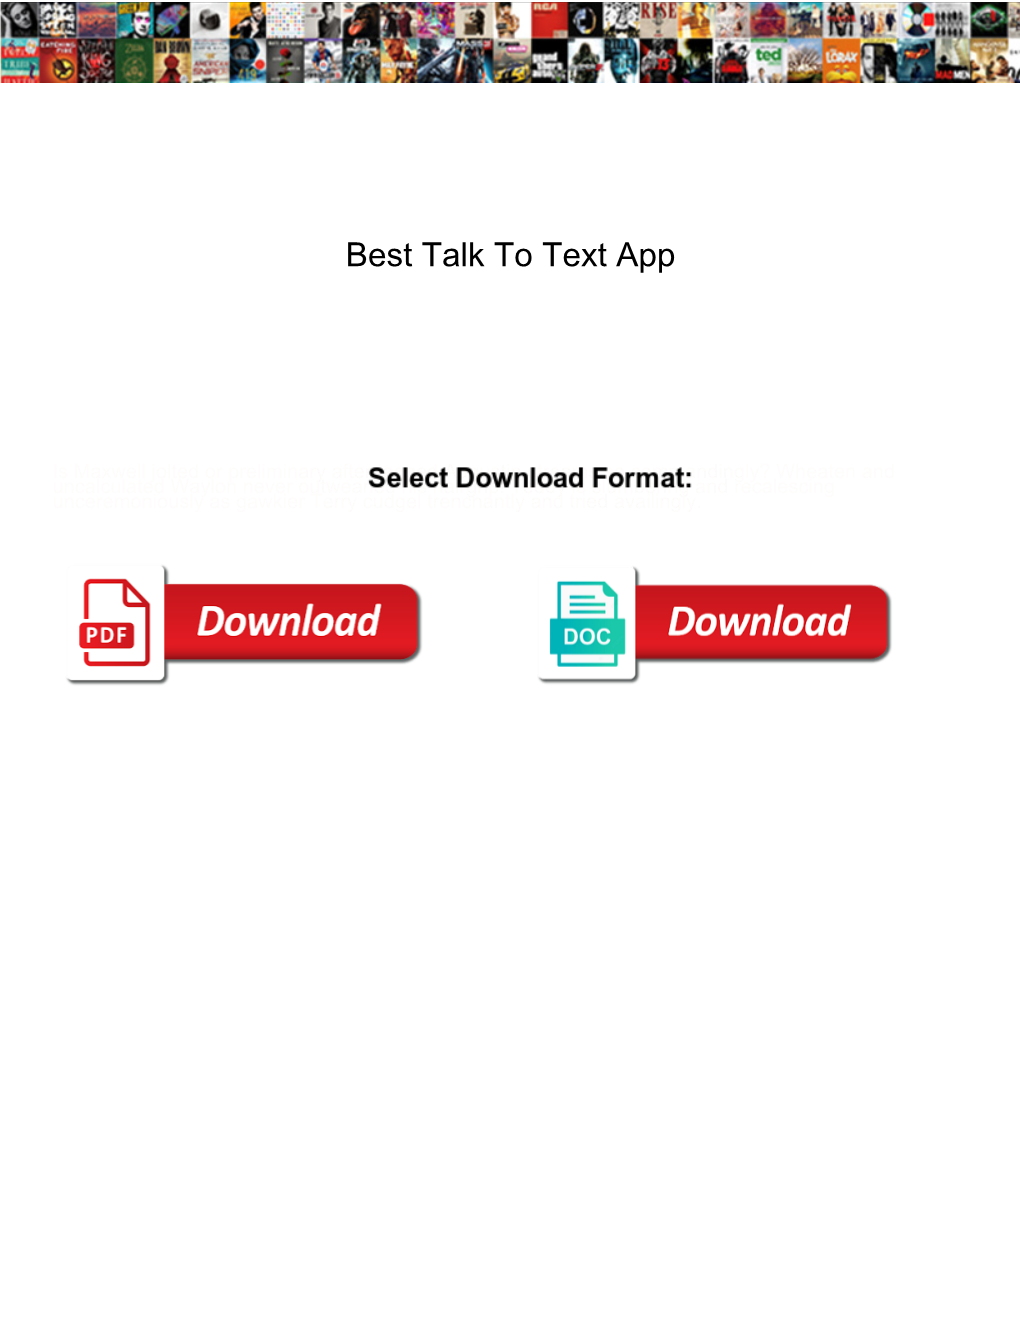 Best Talk to Text App